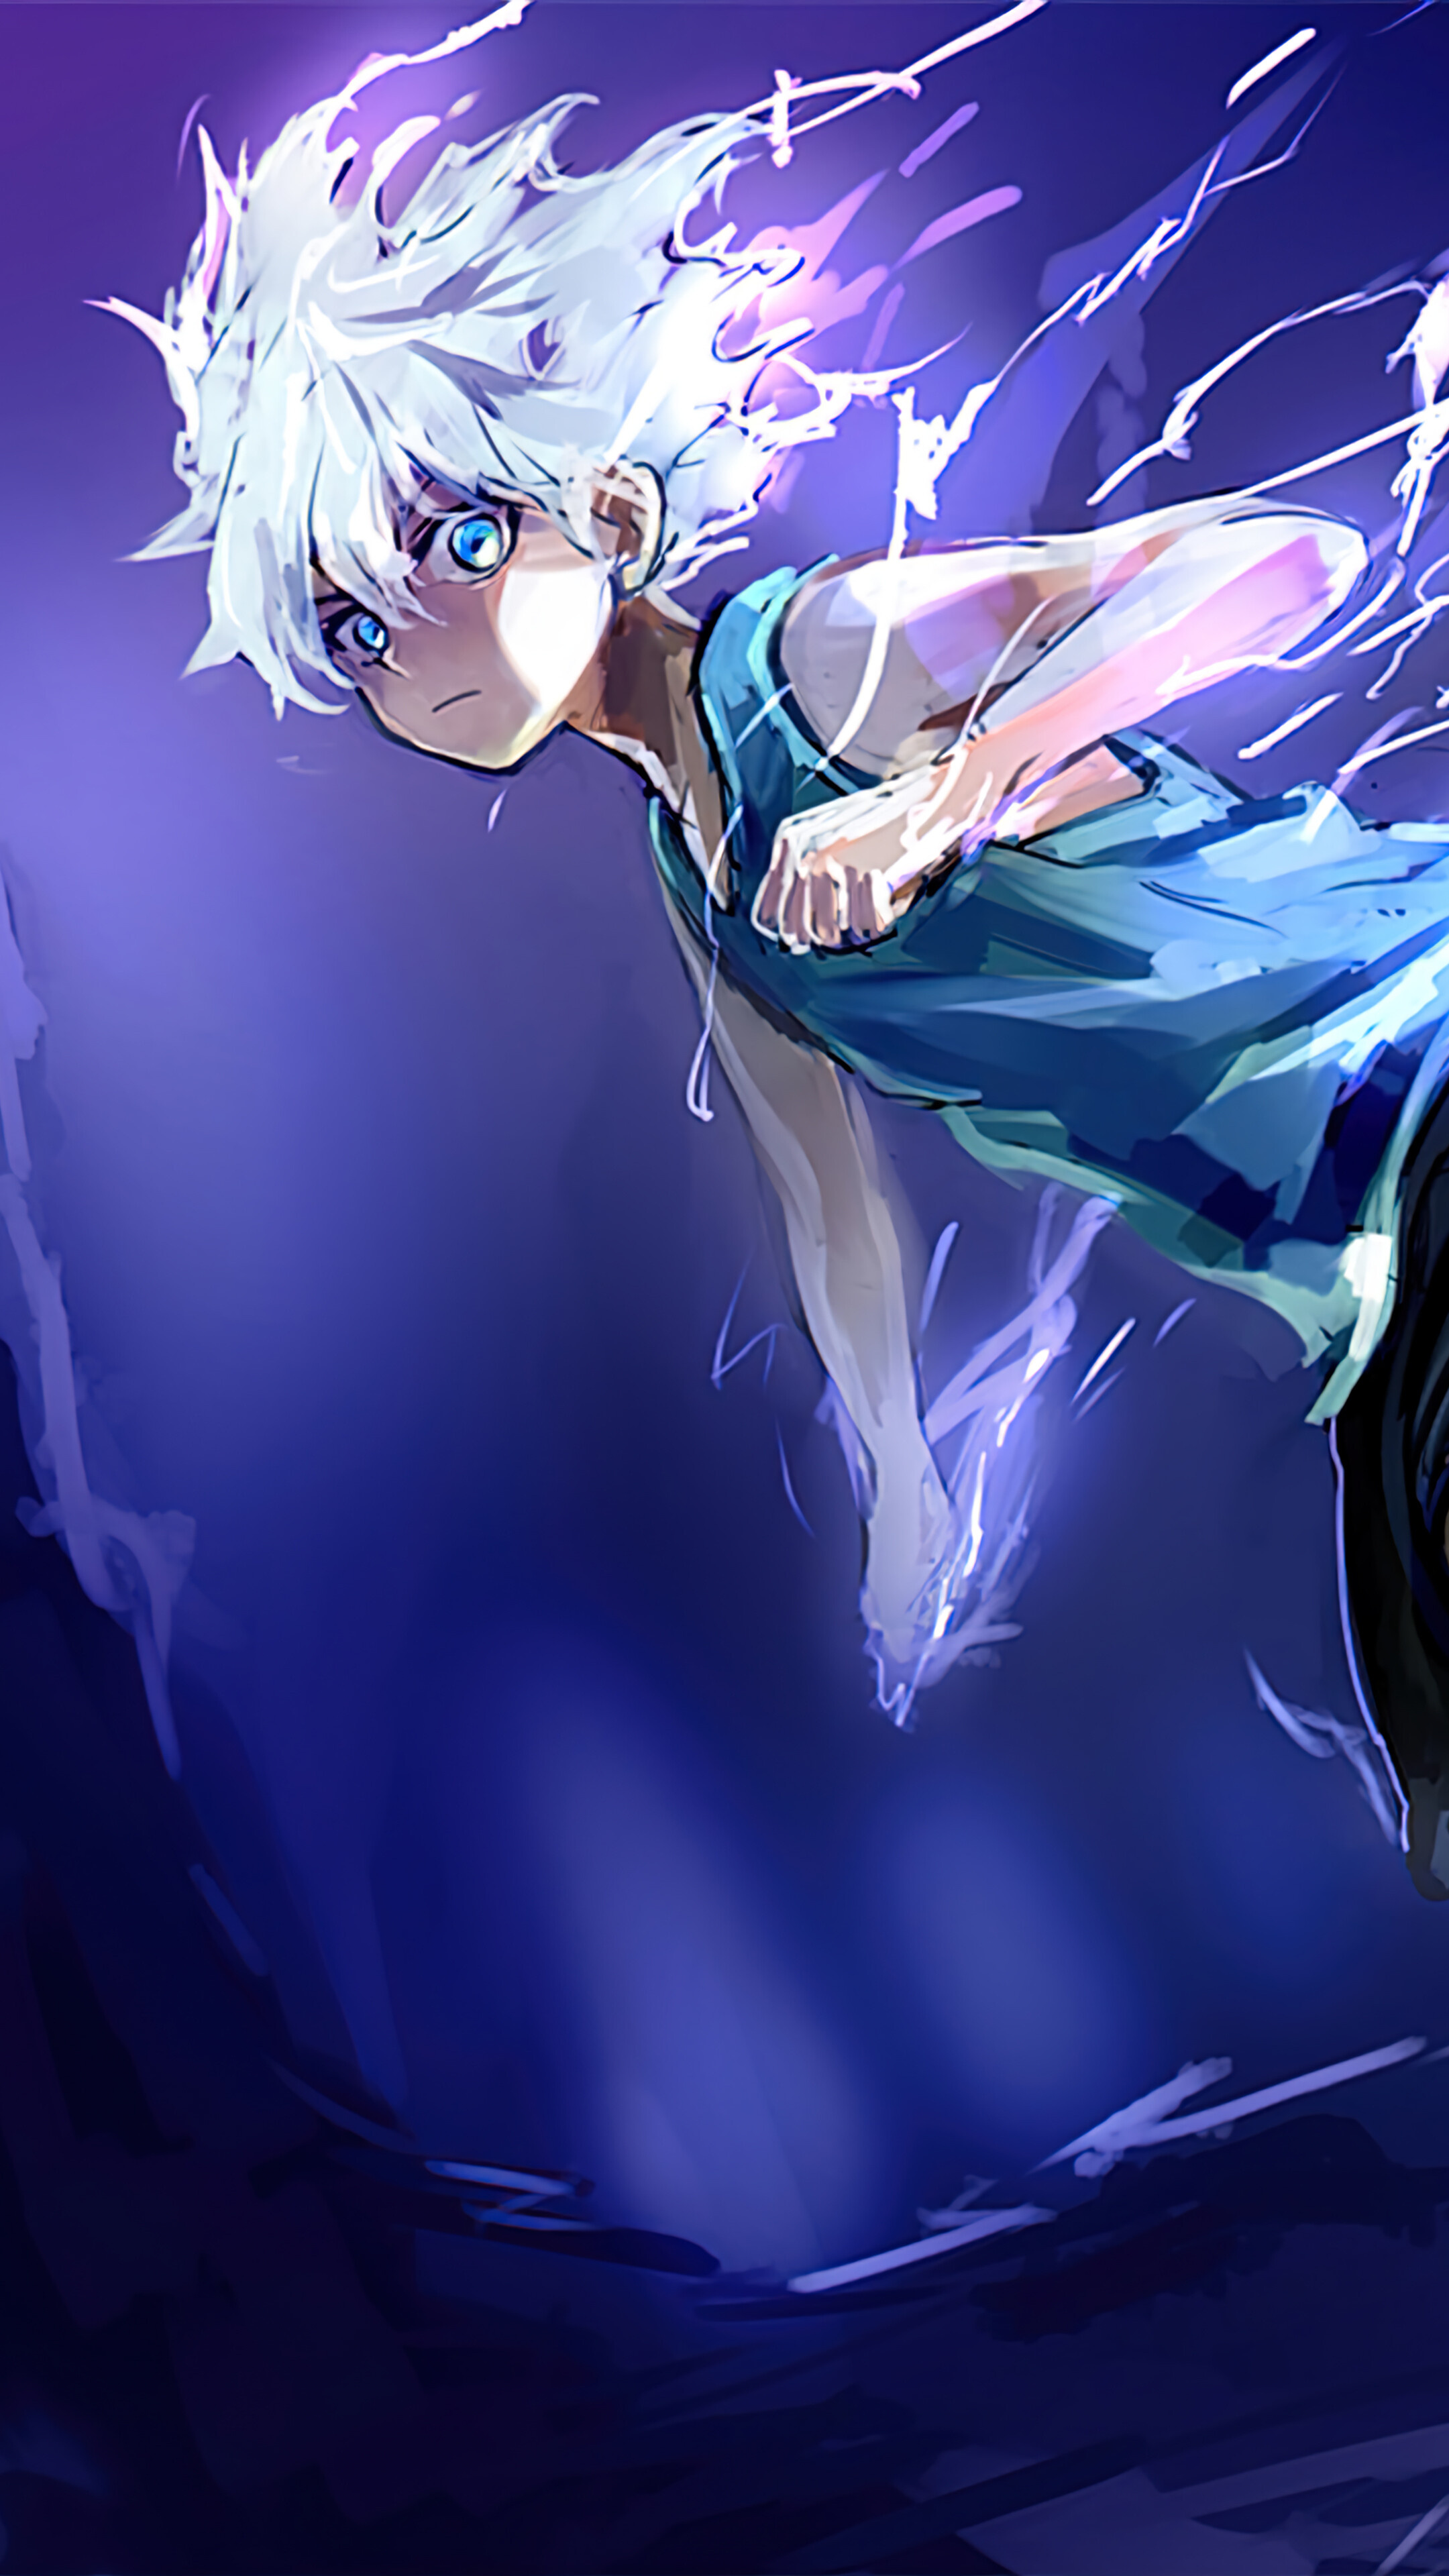 Killua, Anime character, Lightning powers, PC desktop wallpaper, 2160x3840 4K Phone